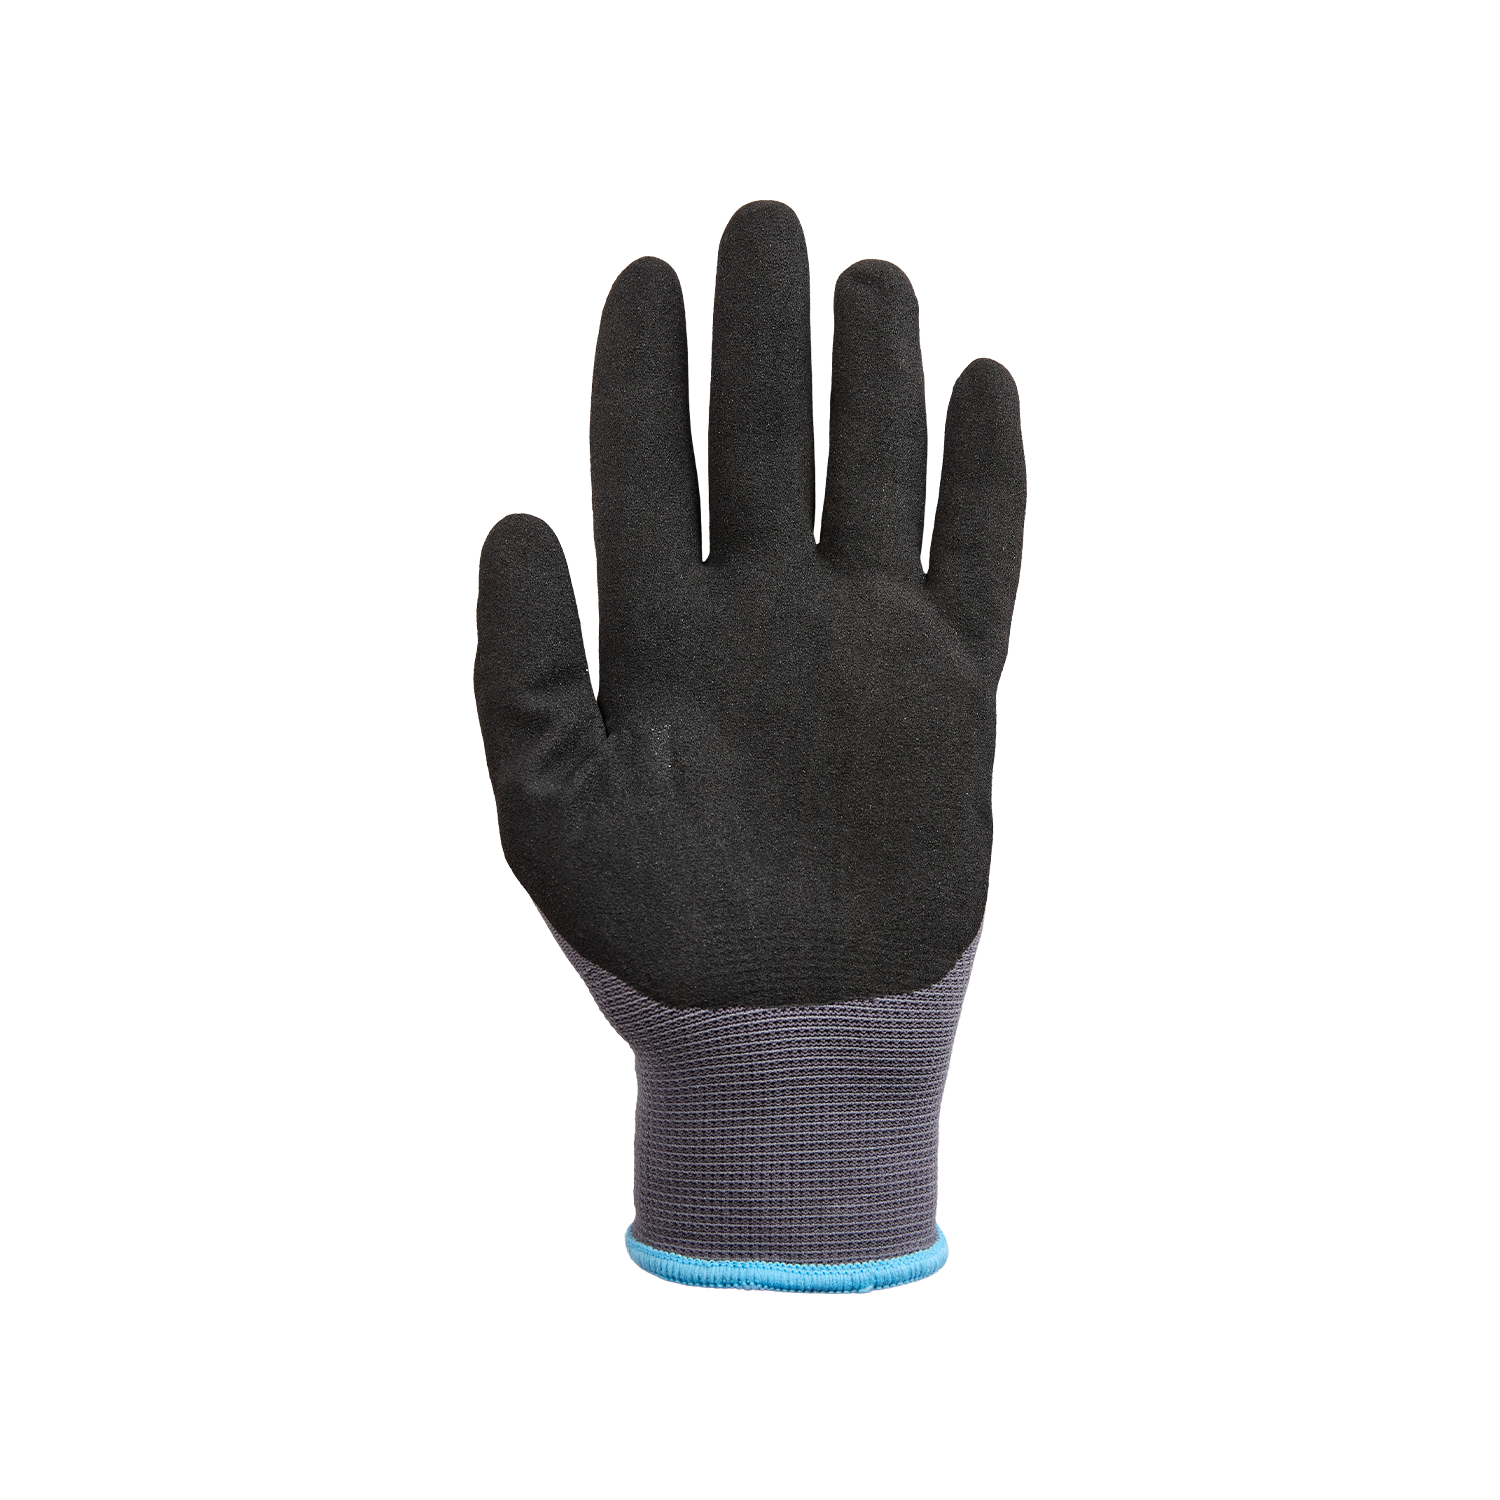 NORSE Flex Original assembly gloves size 10